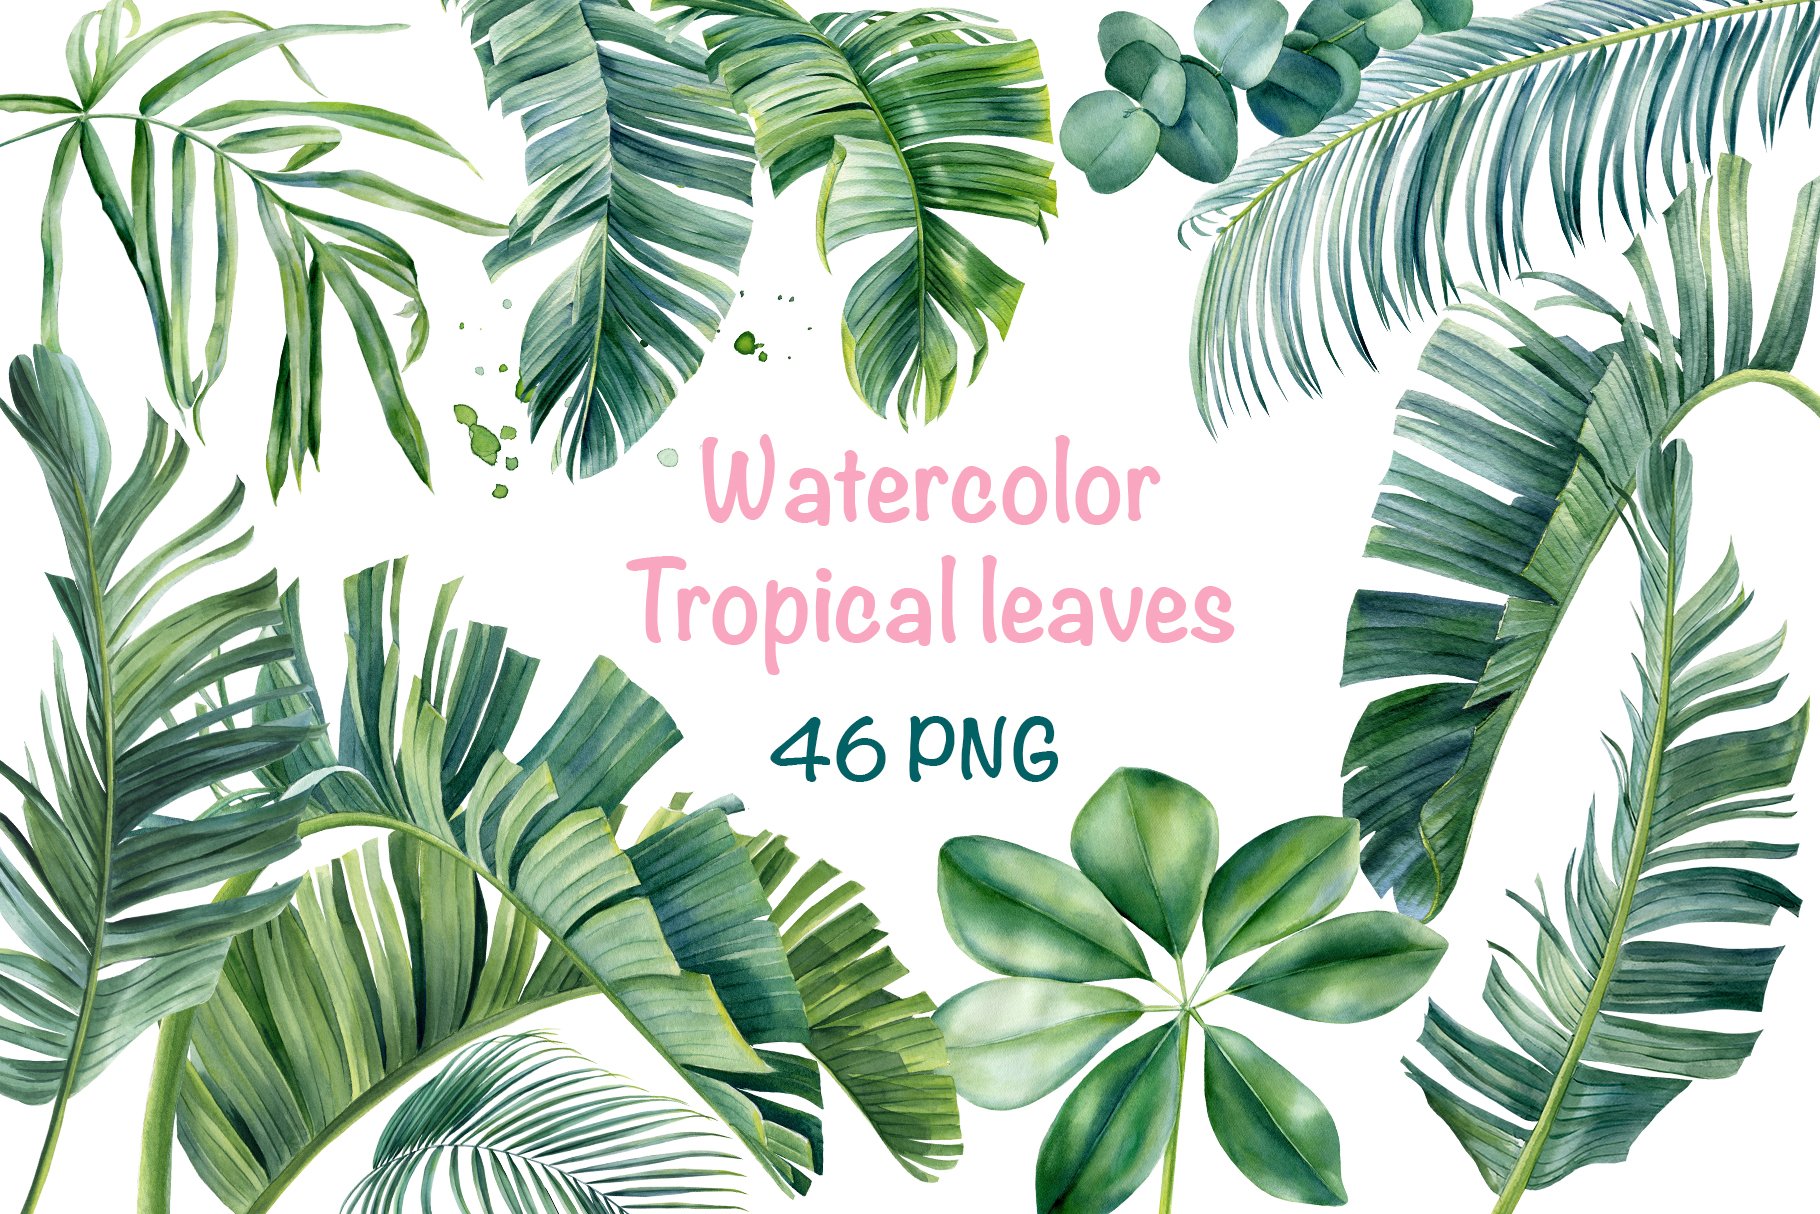 Watercolor Bundle tropical leaves cover image.